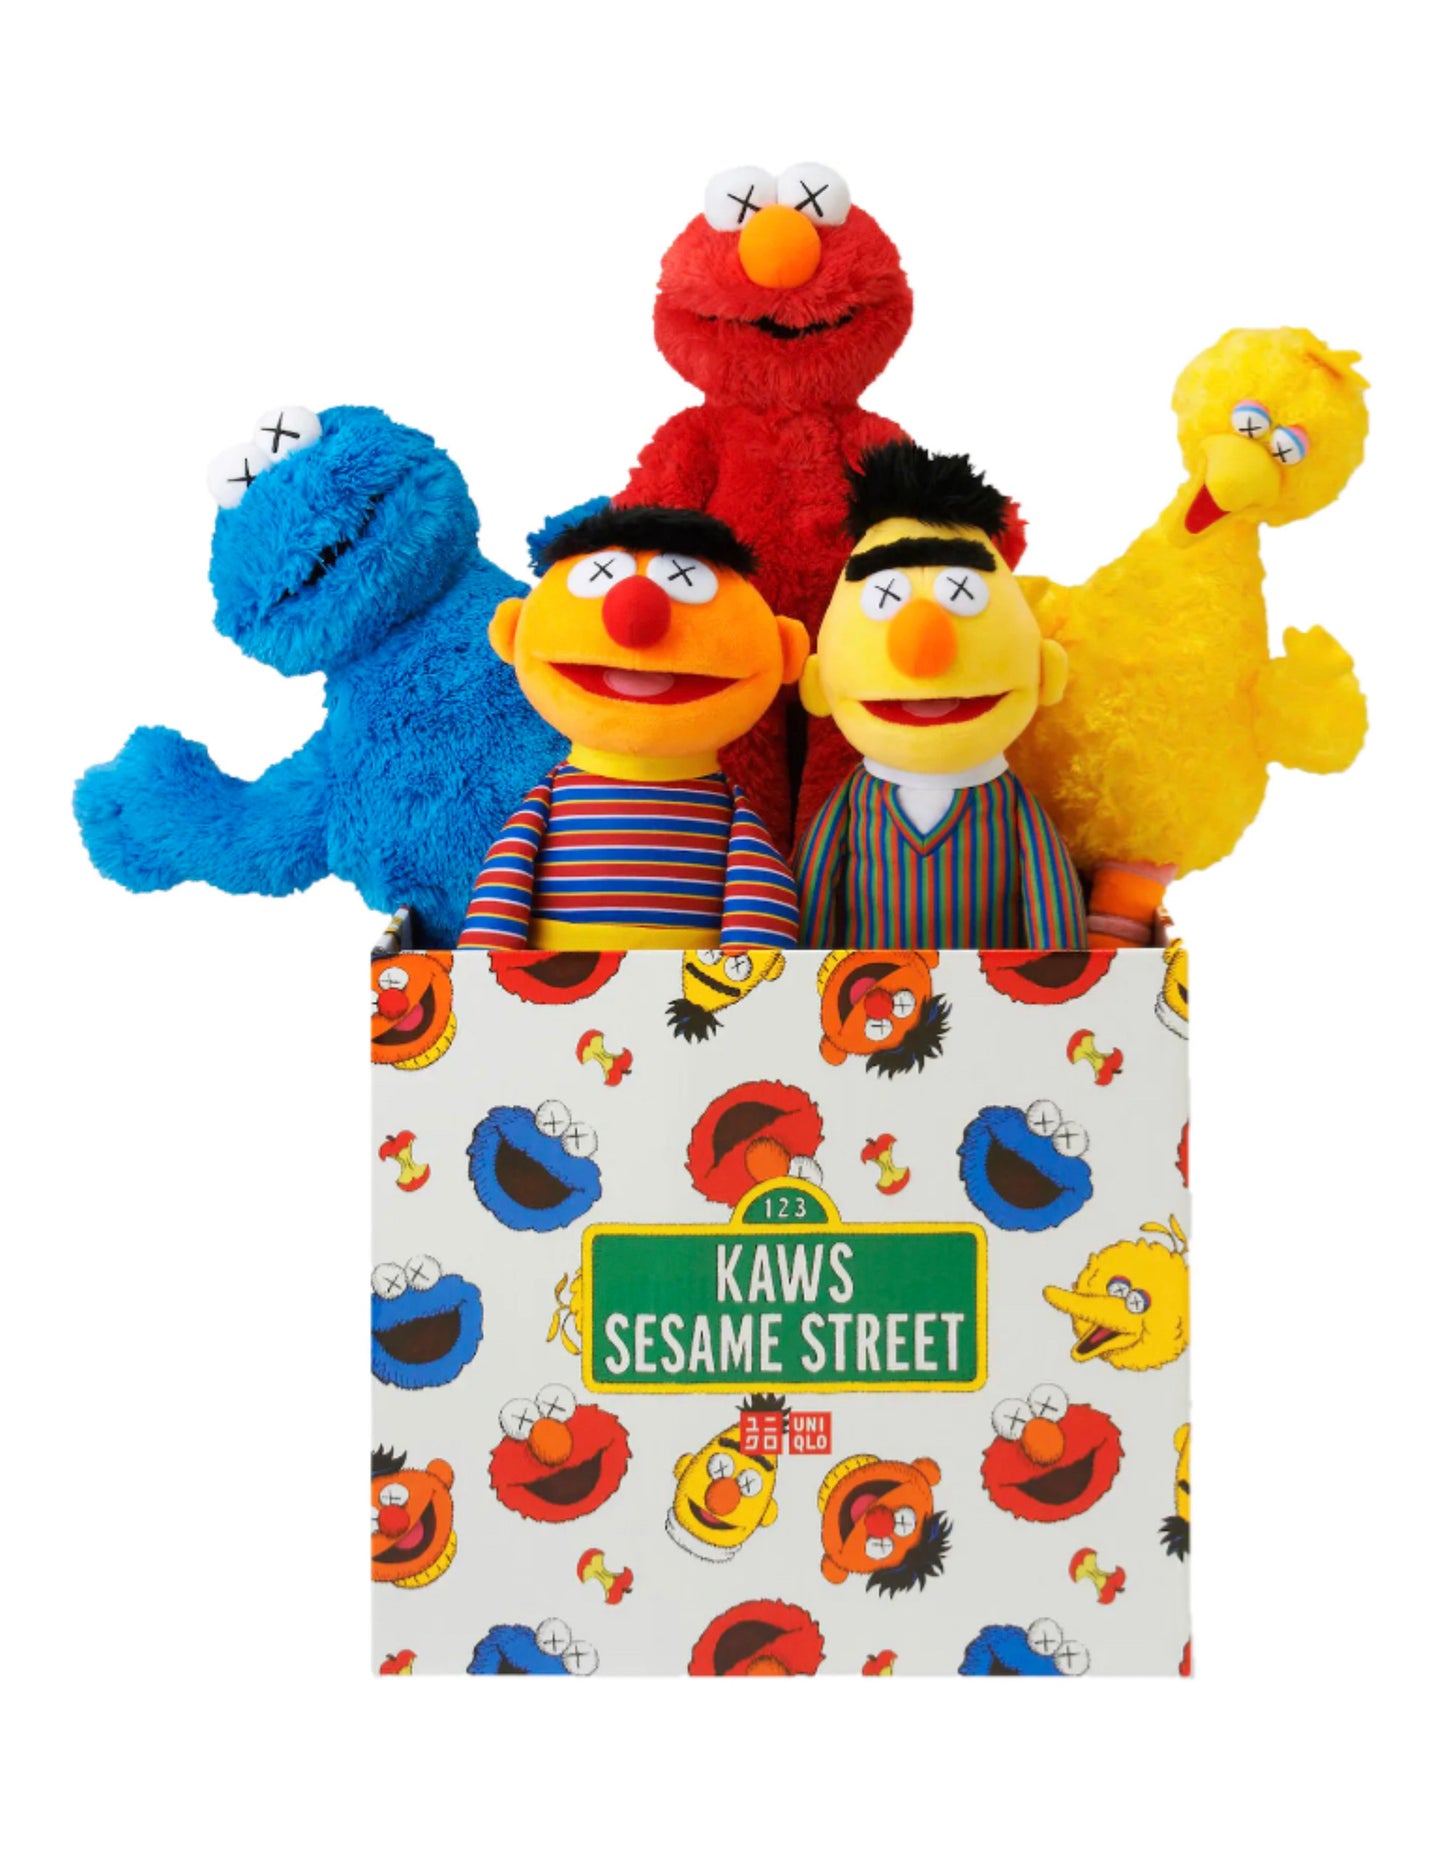 KAWS - Sesame Street Uniqlo Plush Set of 5, 2018